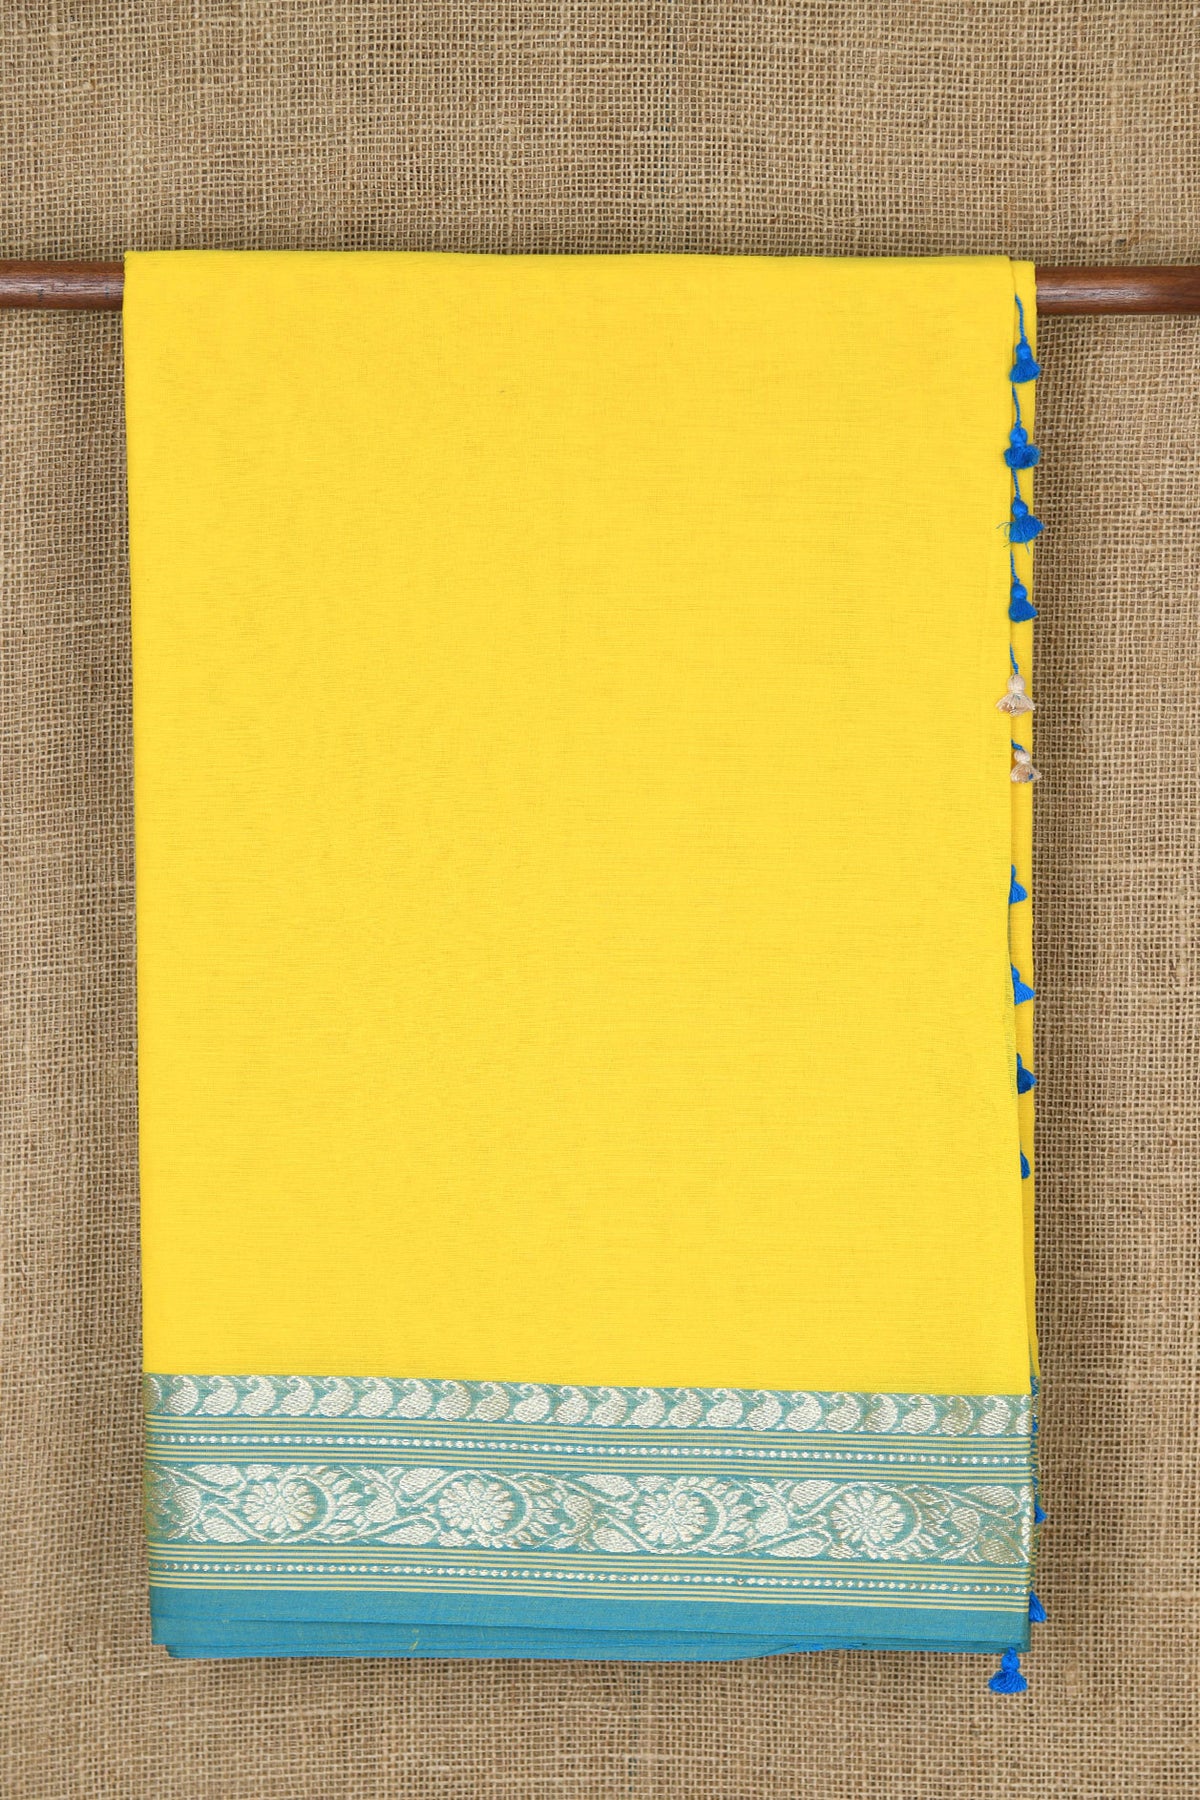 Thread Work Border In Plain Yellow Bengal Cotton Saree